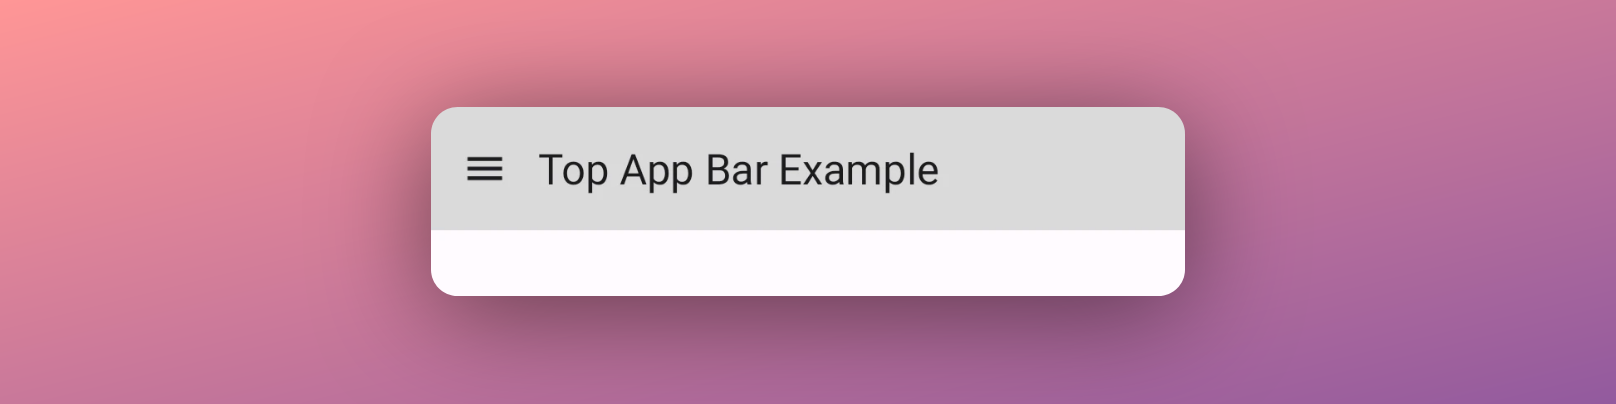 Top App Bar Example